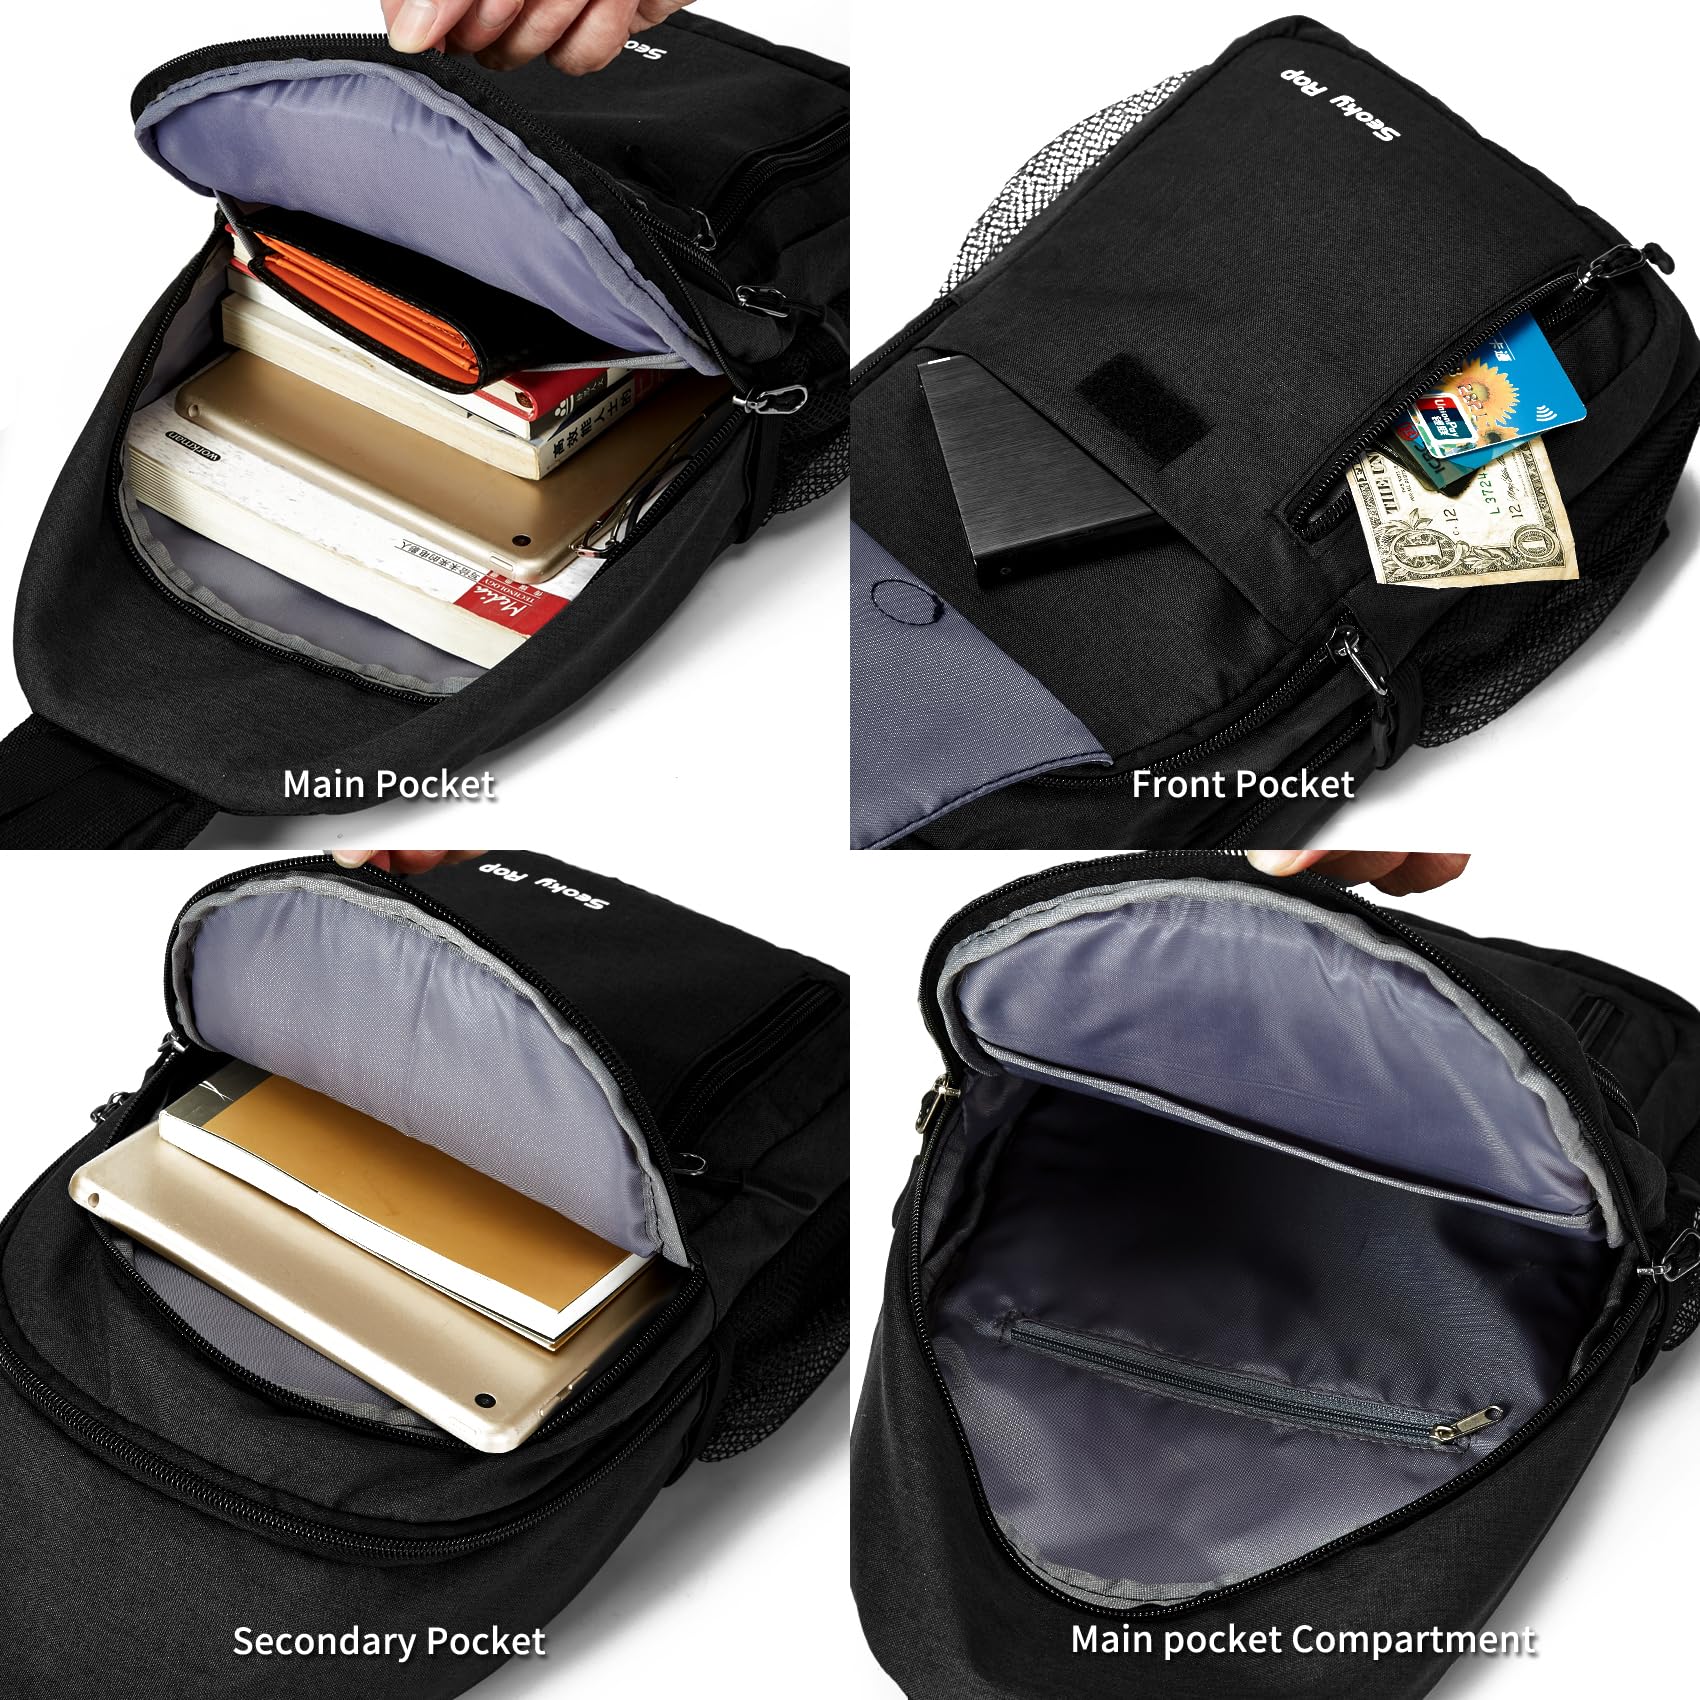 Seoky Rop Sling Backpack Bag for Men Women Water Resistant Crossbody Bag Daypack for Hiking Travel Black